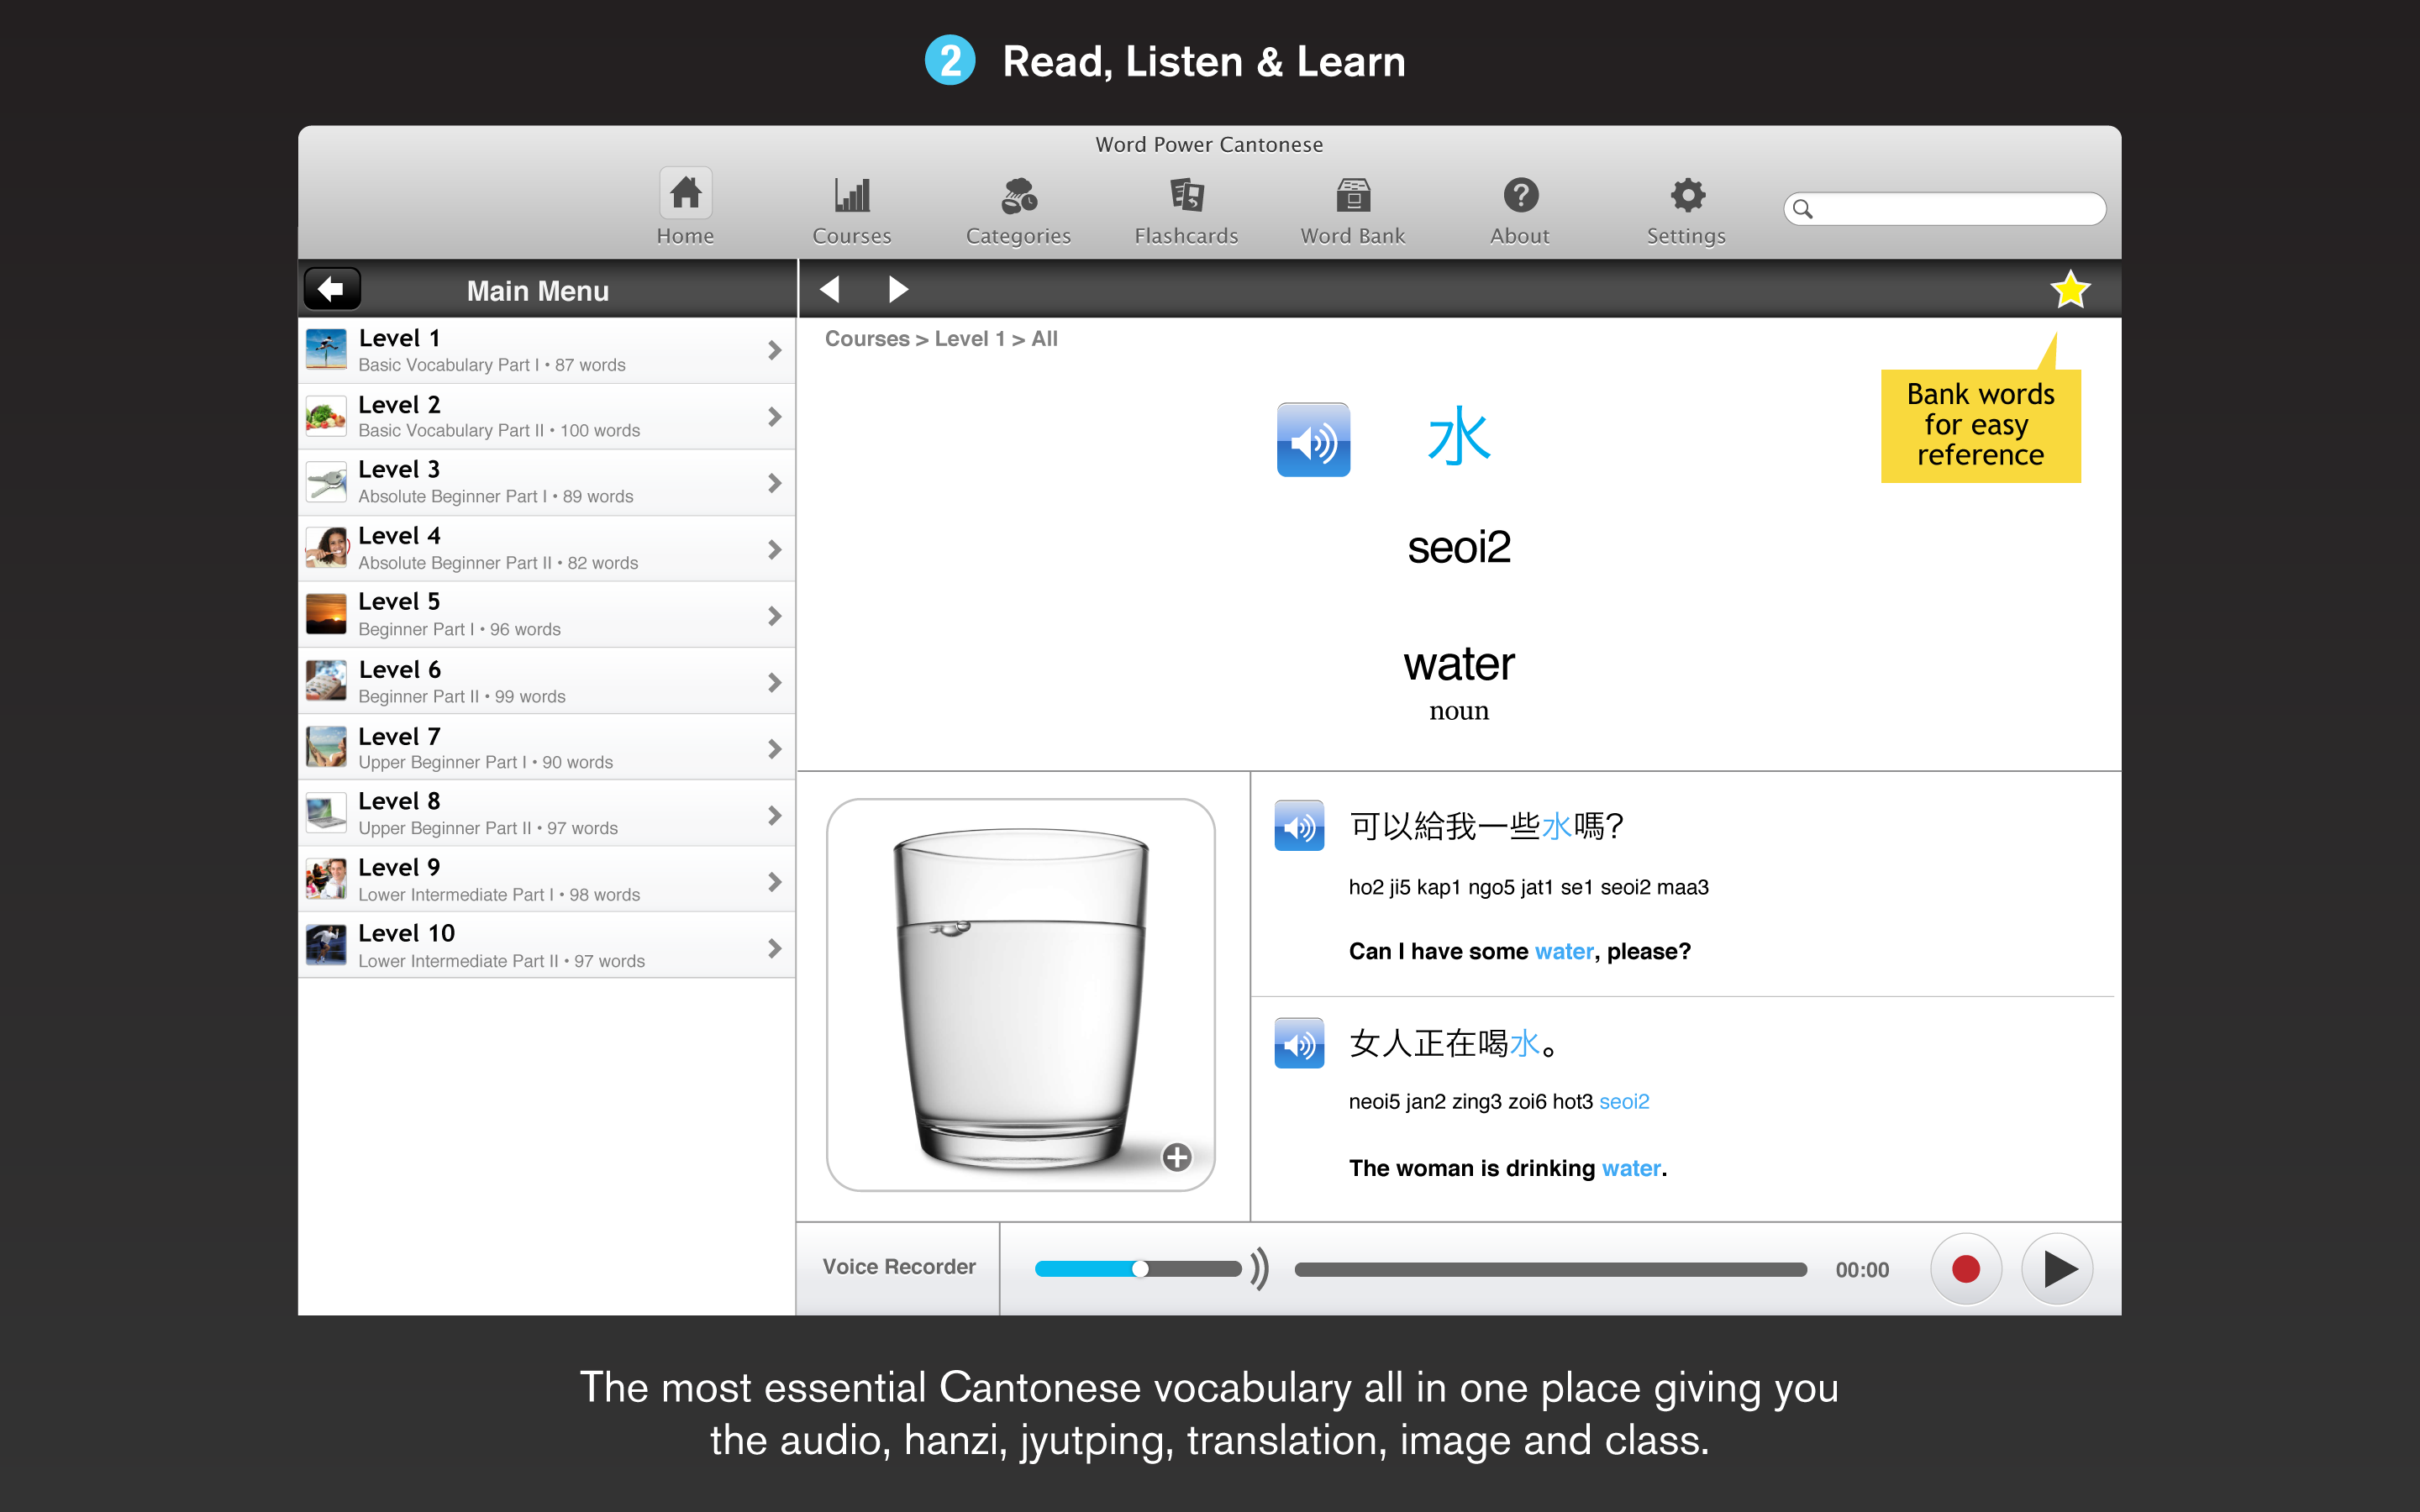 Screenshot 2 - Learn Cantonese Gengo WordPower 